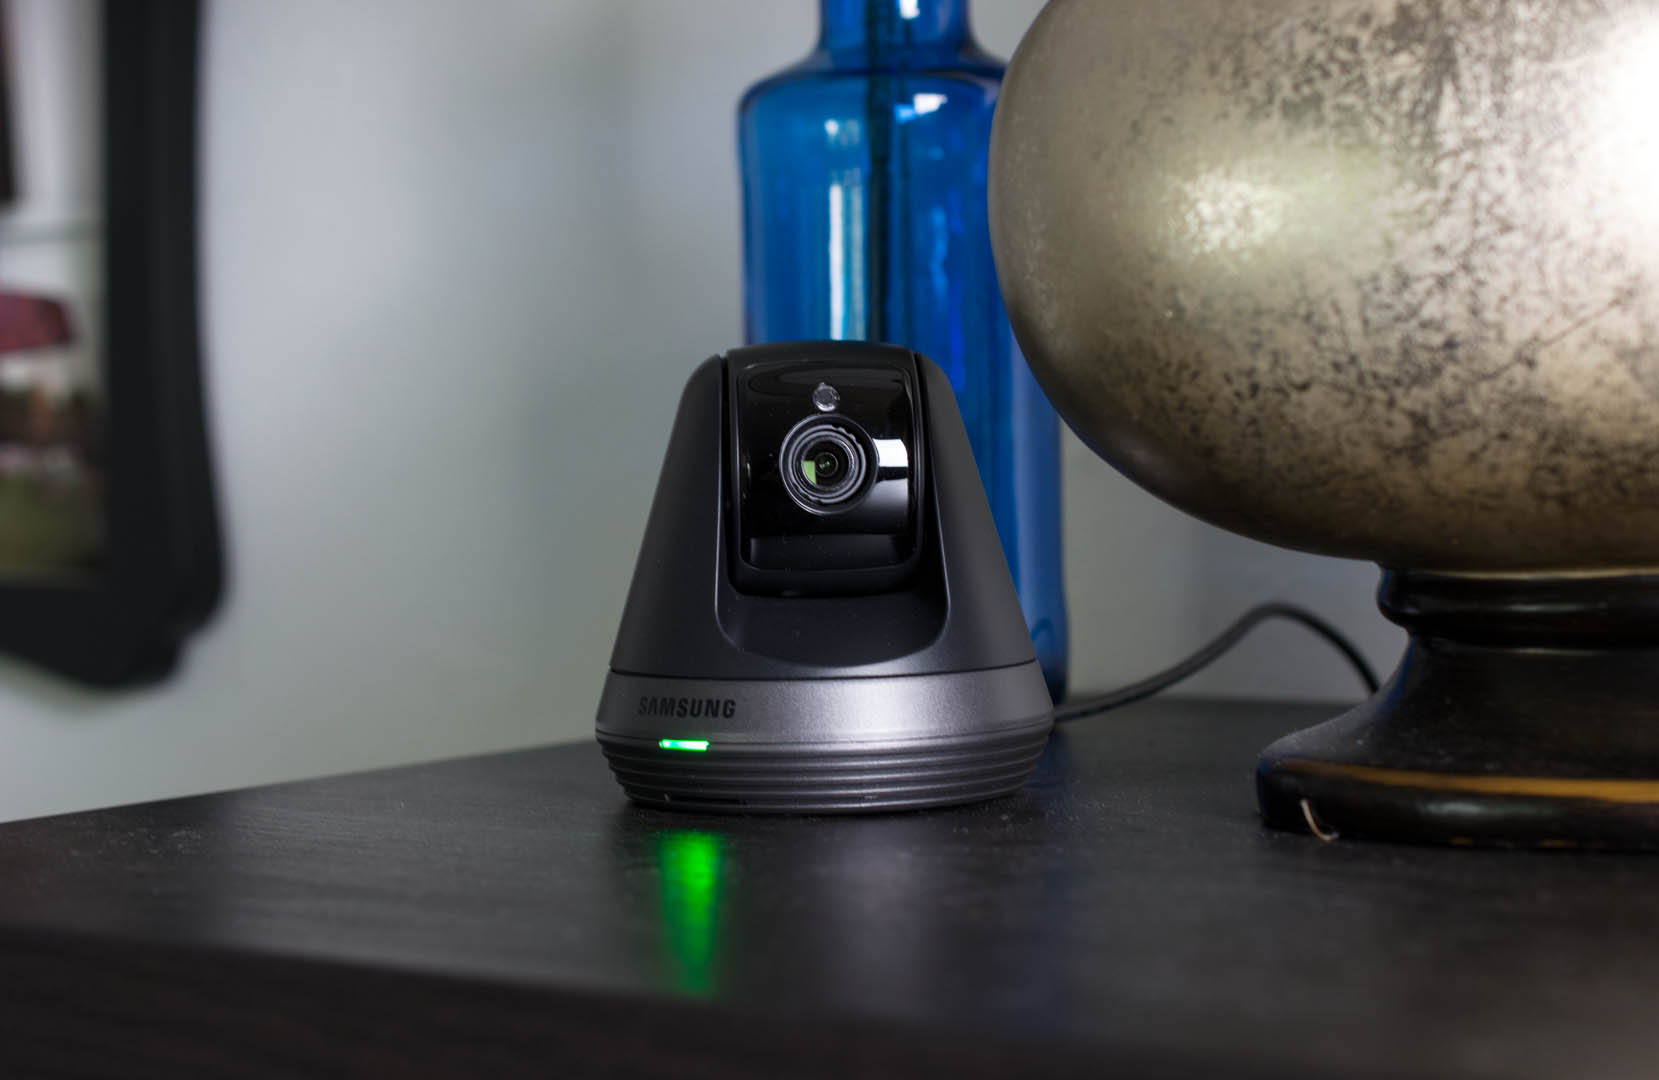 samsung pan tilt smart home kamera